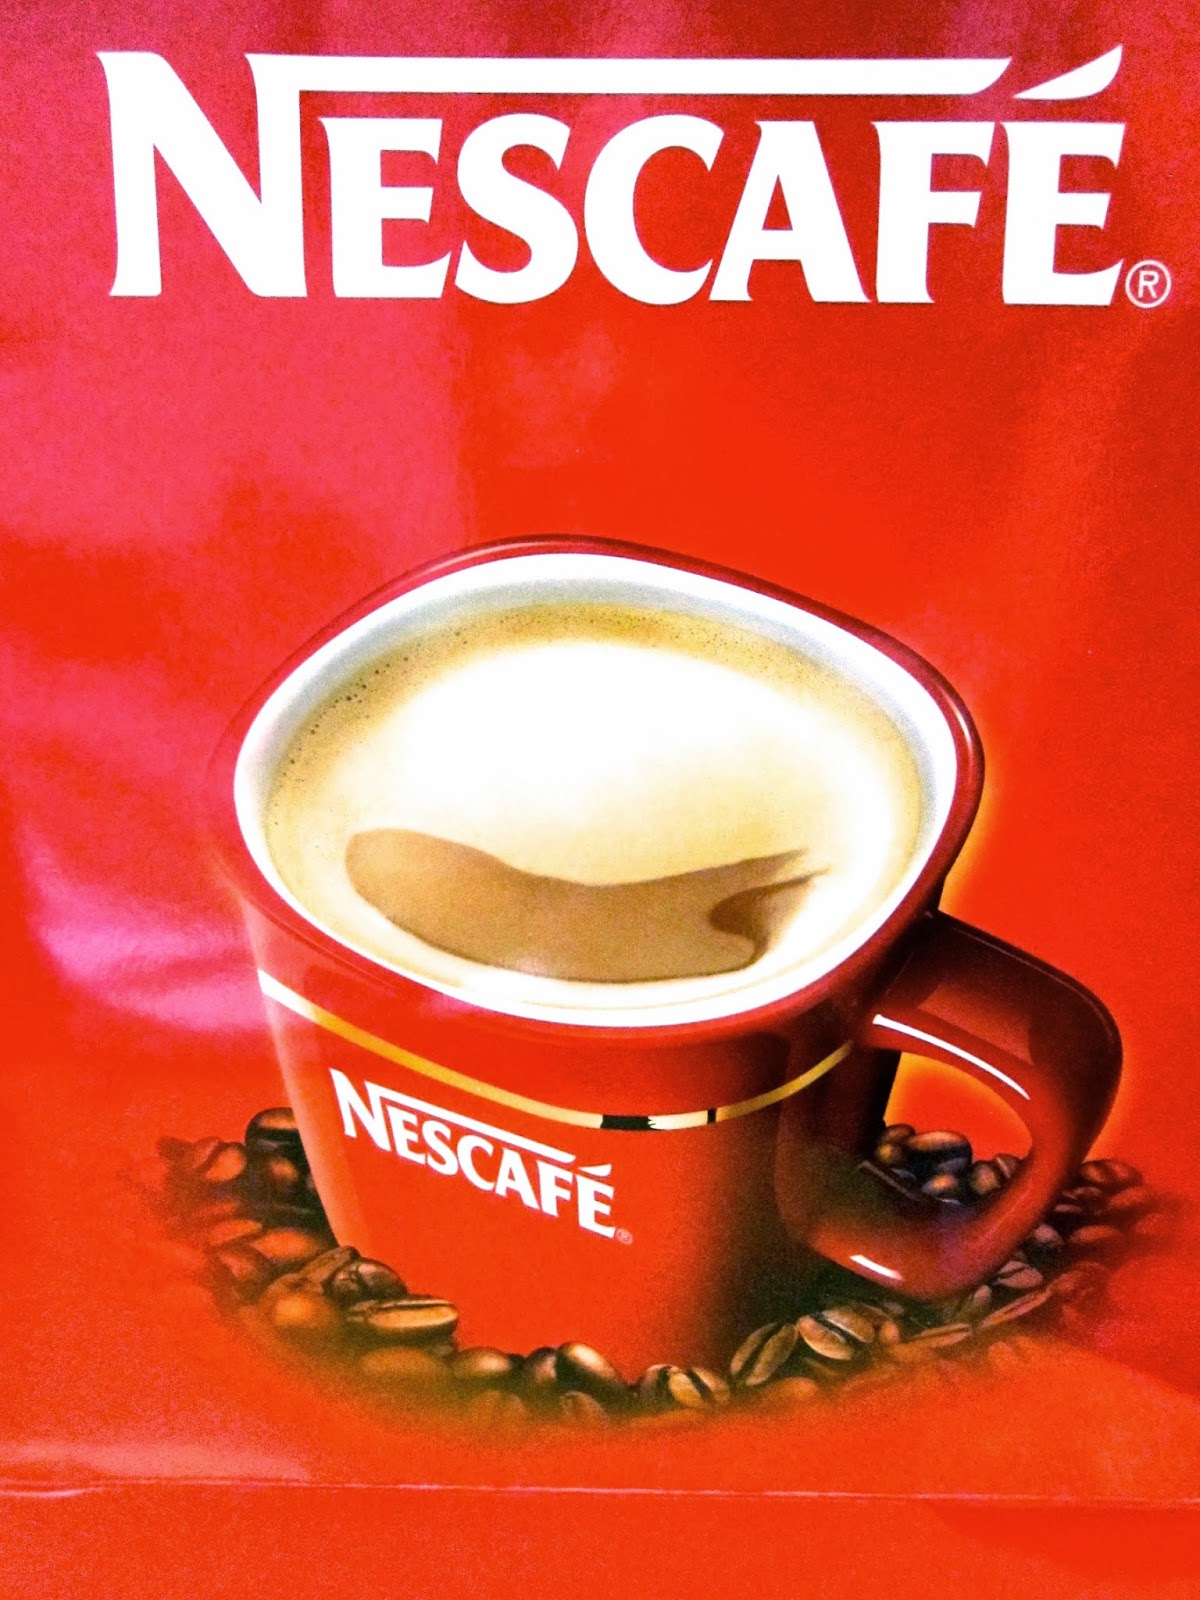 Nescafe Sunrise Mp3 Song Free 16